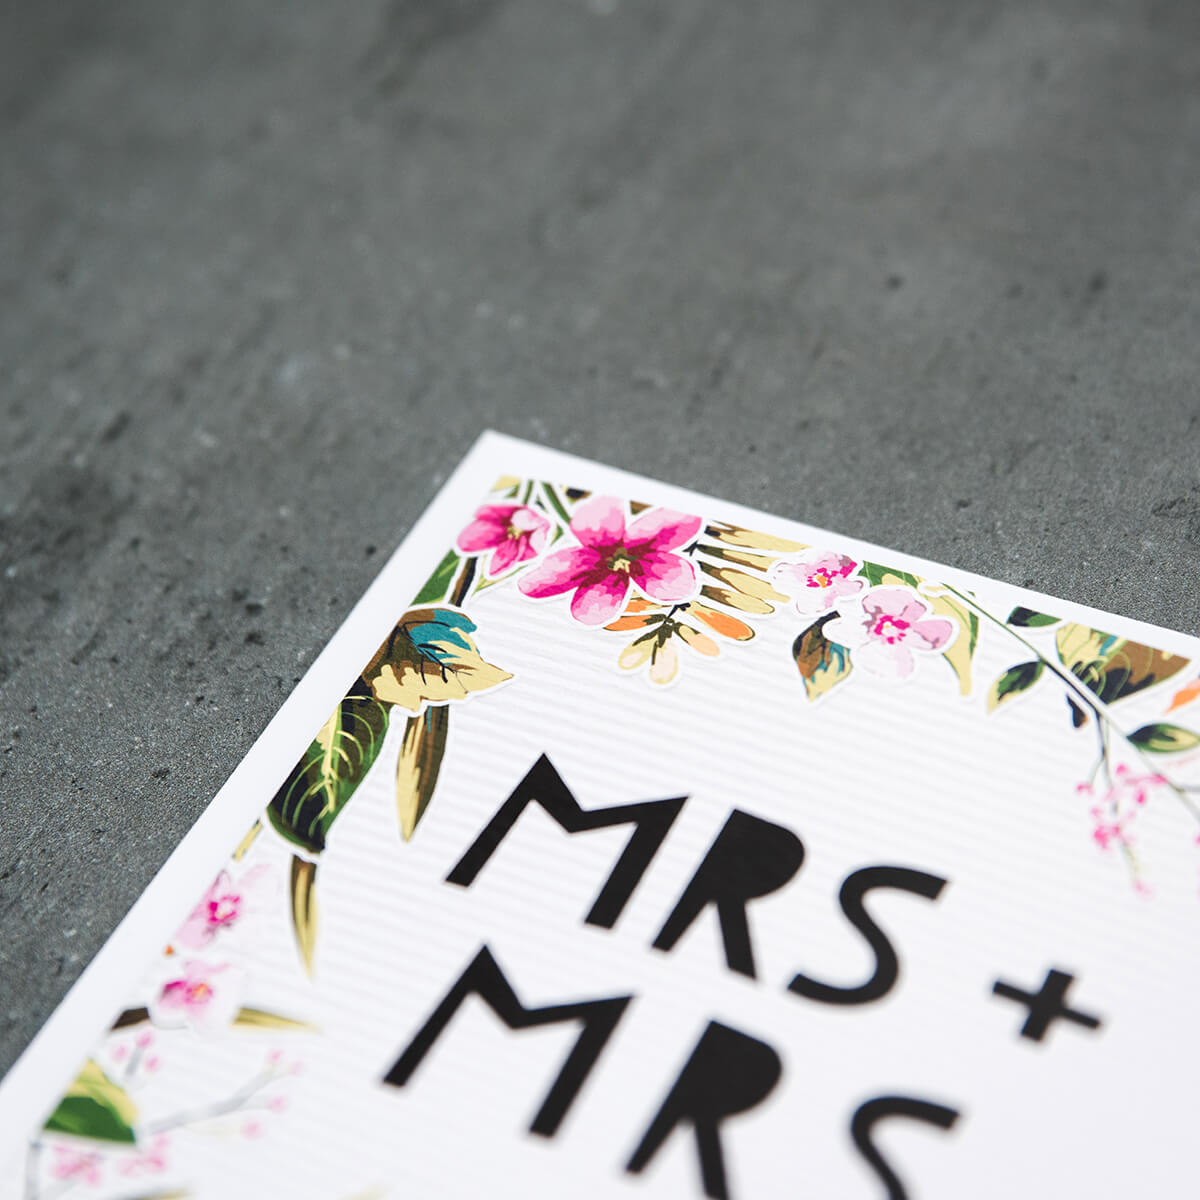 &#39;Mrs + Mrs&#39; Gay Wedding Card - I am Nat Ltd - Greeting Card